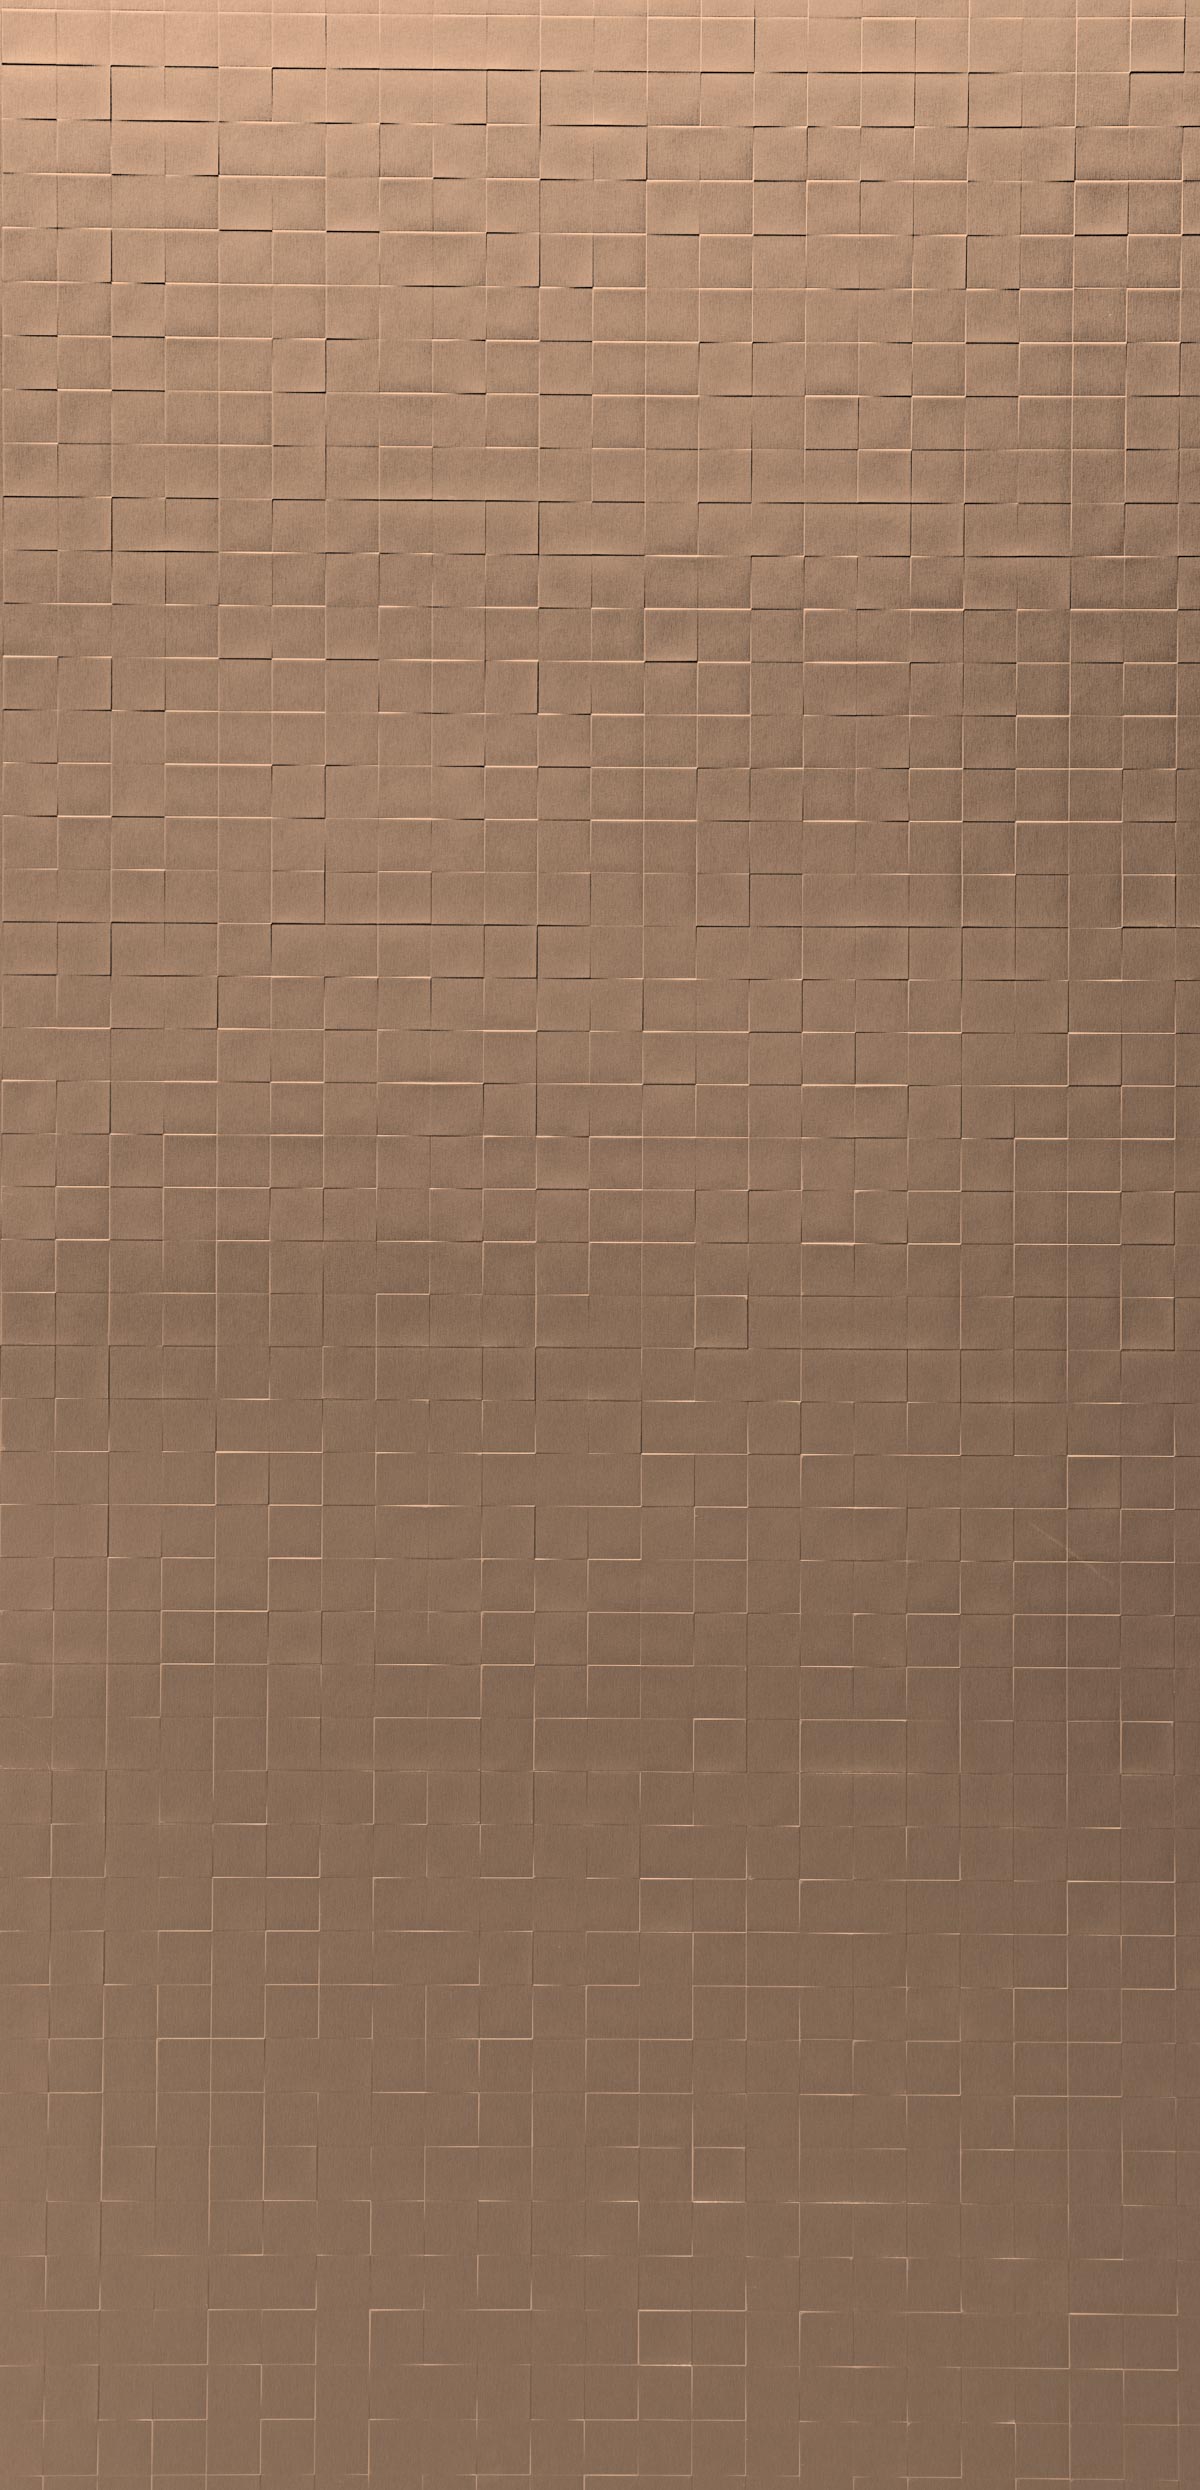 Bronze brushed 4045-panel